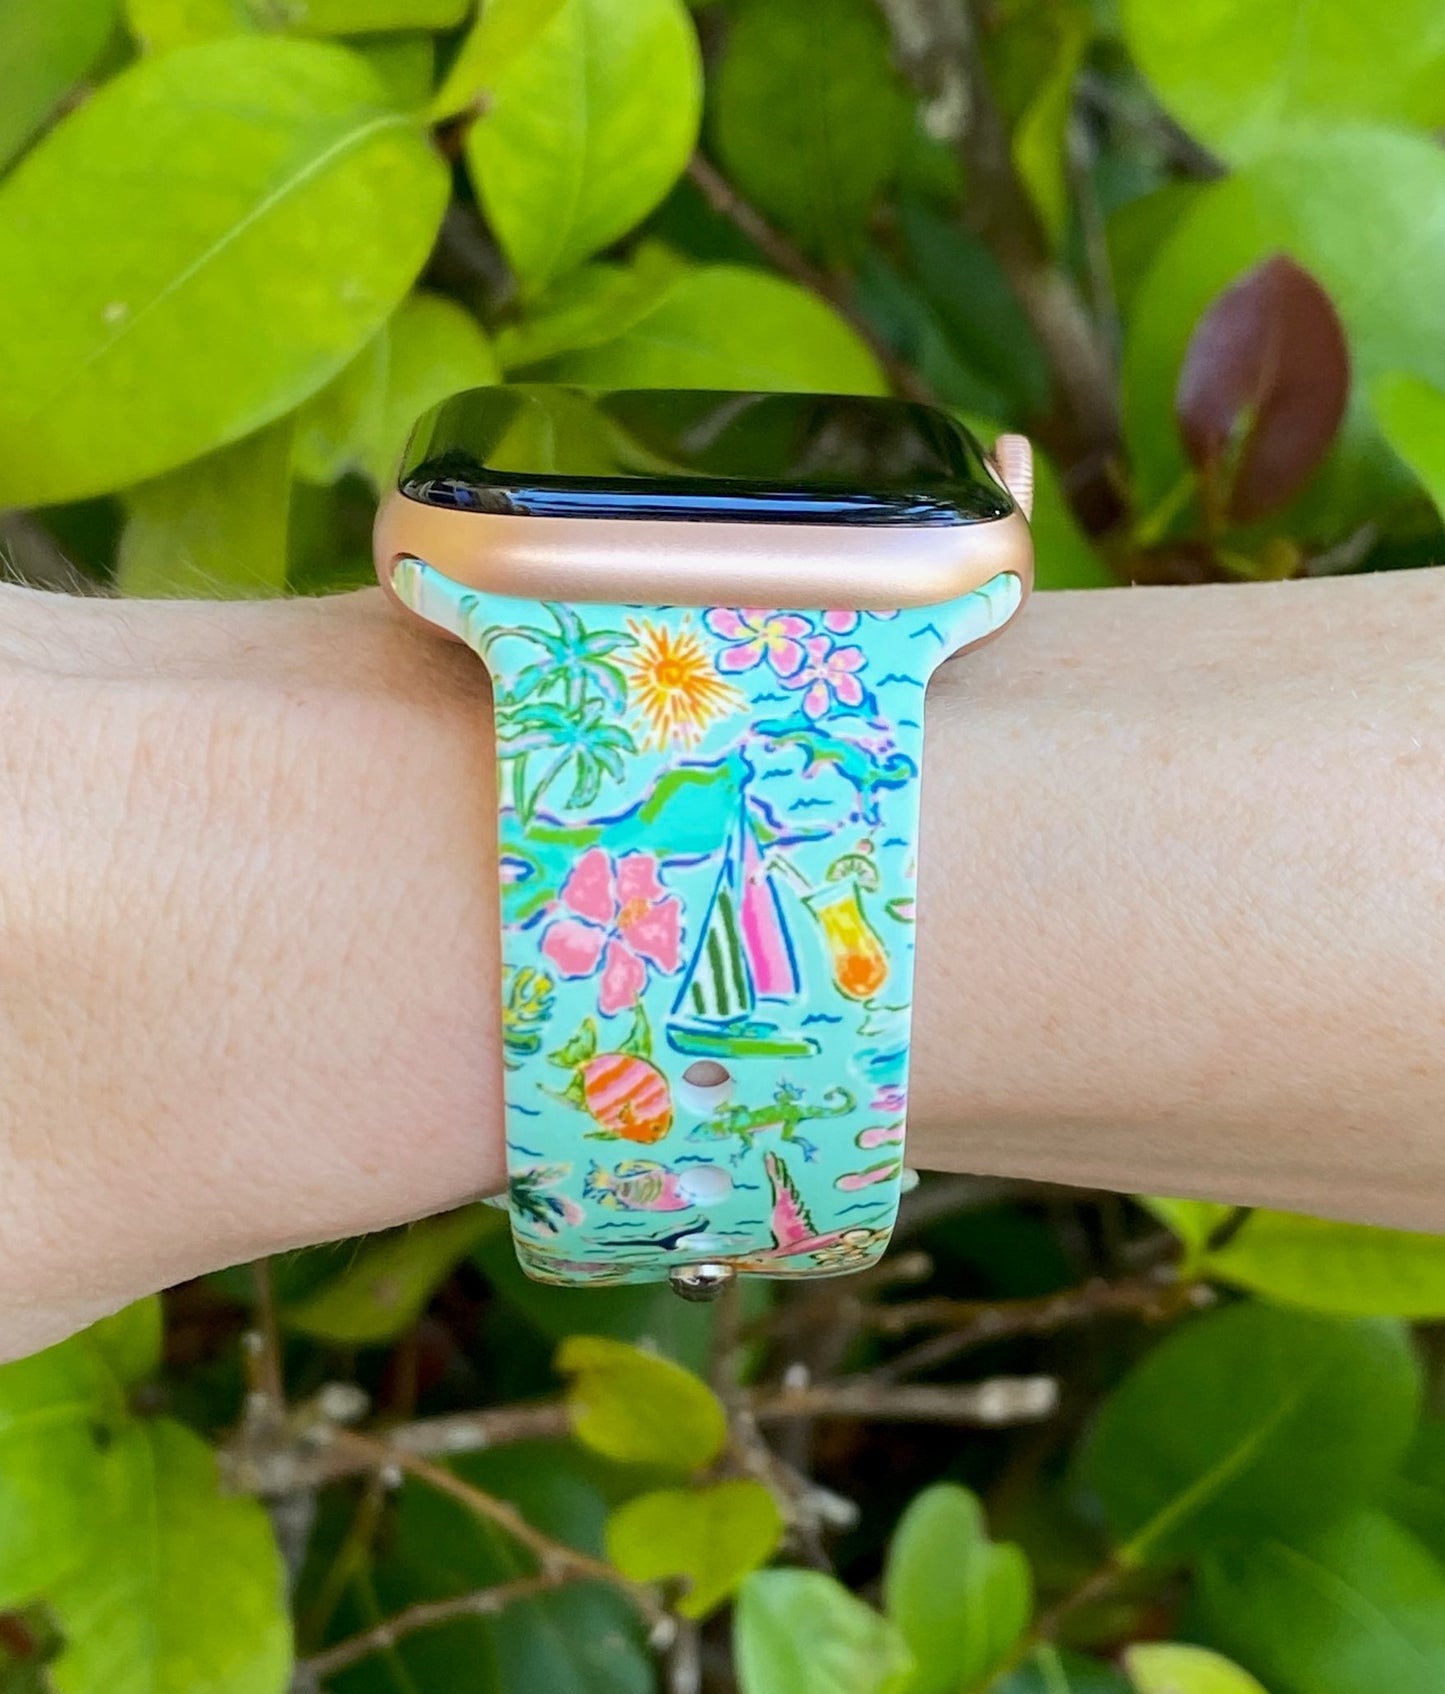 Bahamas Apple Watch Band